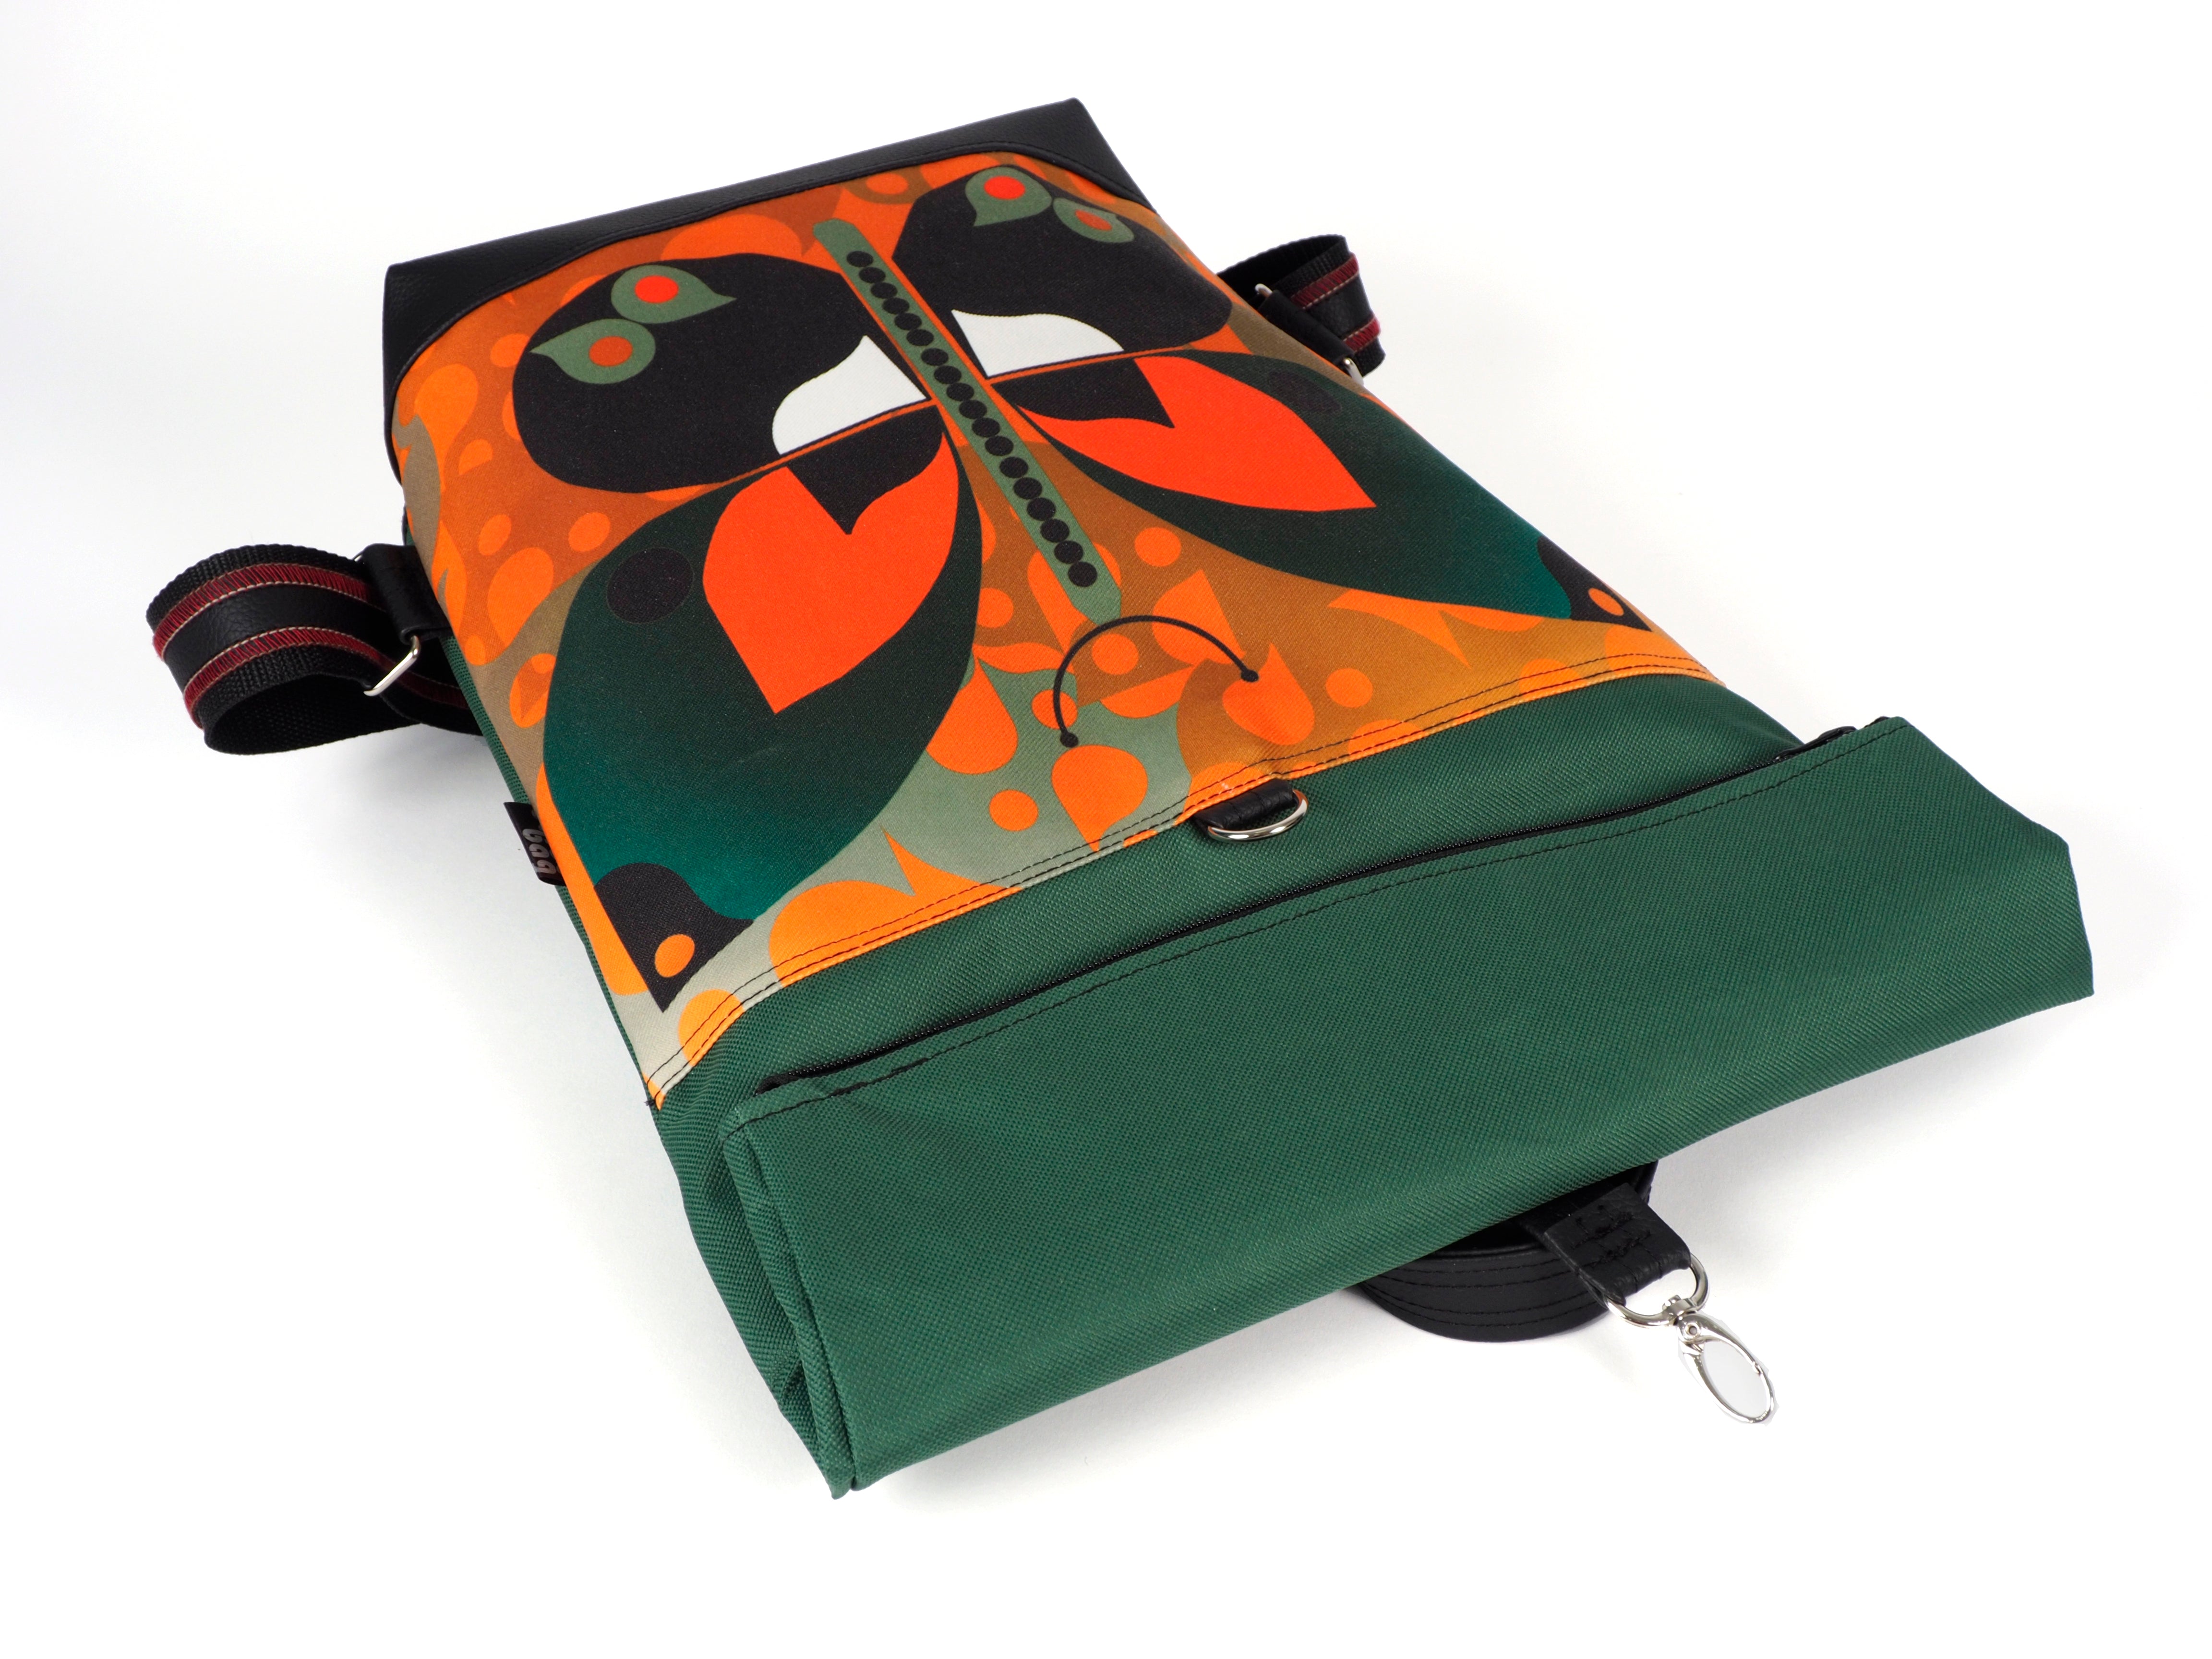 Bardo roll backpack - Butterfly - Premium Bardo backpack from BARDO ART WORKS - Just lvabstract, art, backpack, black, dance, dark blue, gift, handemade, jazz, orange, purple, red, tablet, urban style, vegan leather, woman85.00! Shop now at BARDO ART WORKS